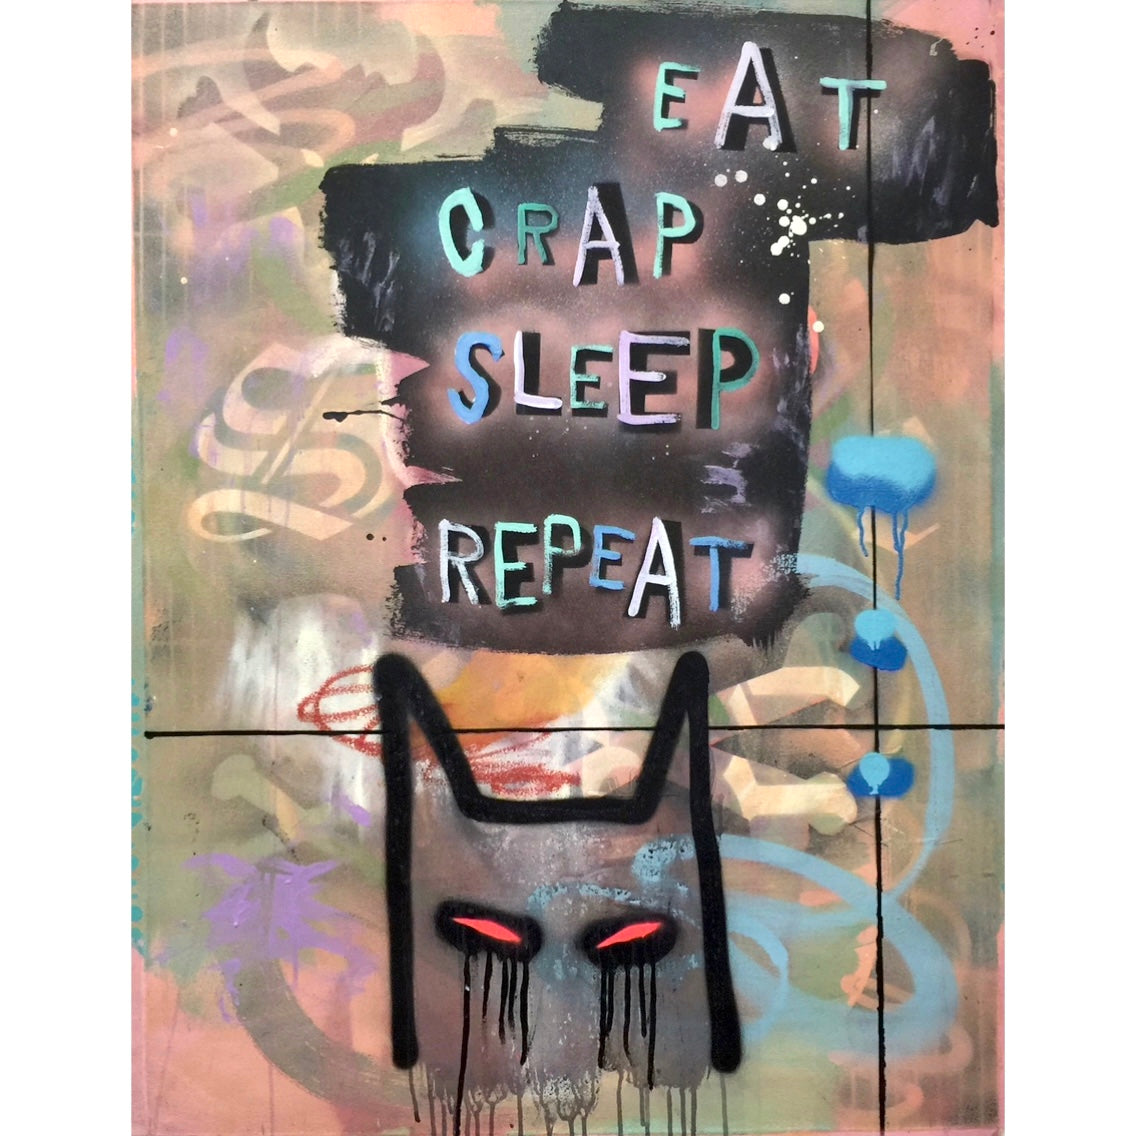 Eat, Crap, Sleep, Repeat